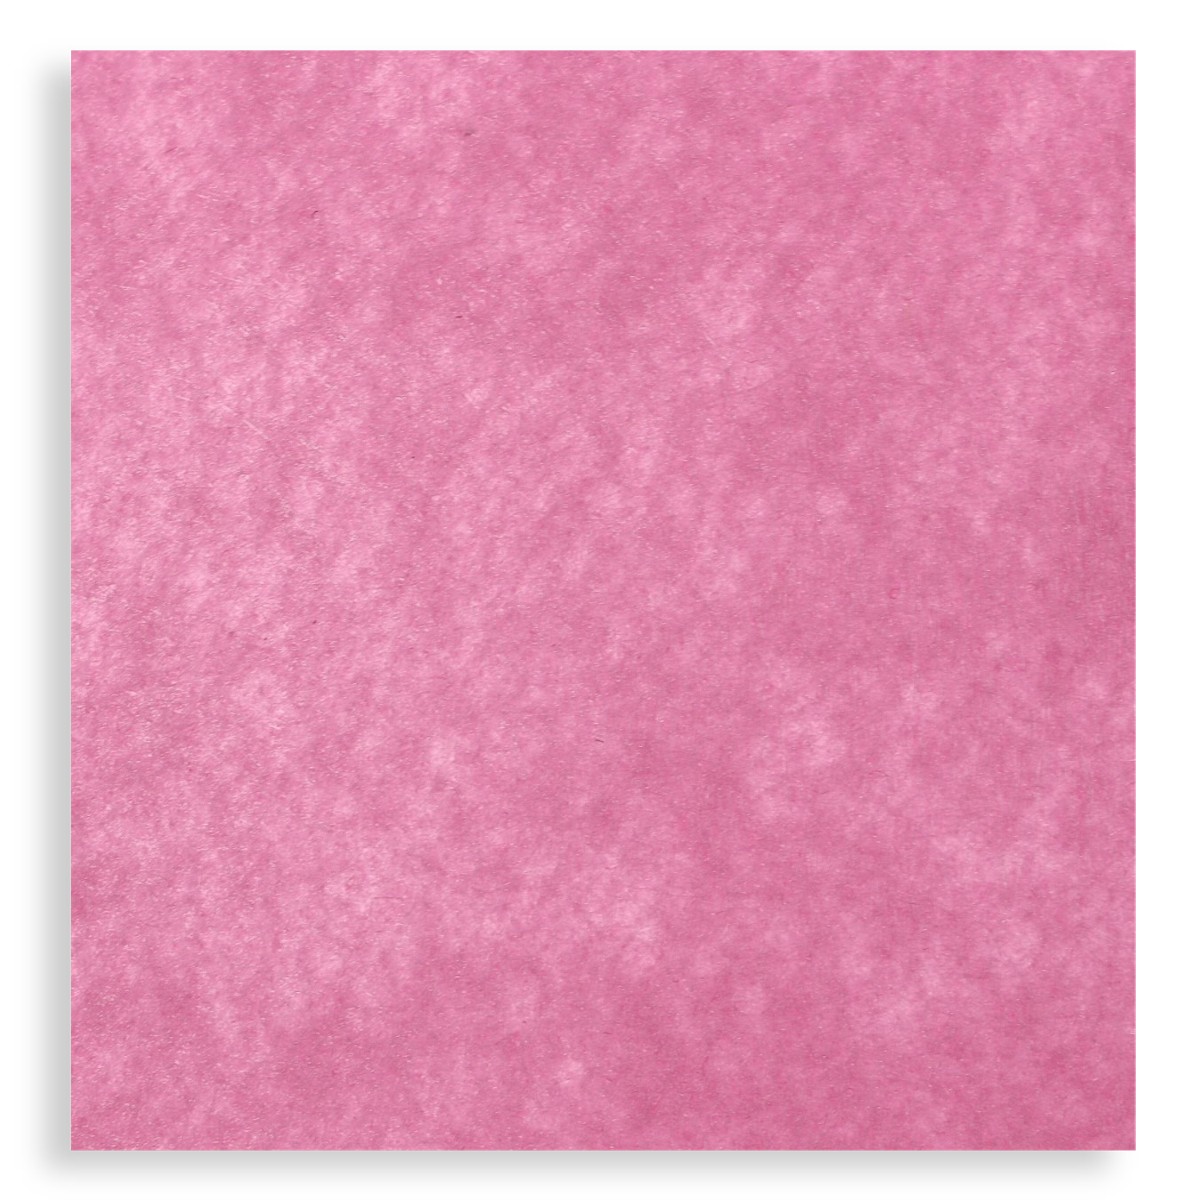 Pasla tare roz 49 5x50cm x 2mm